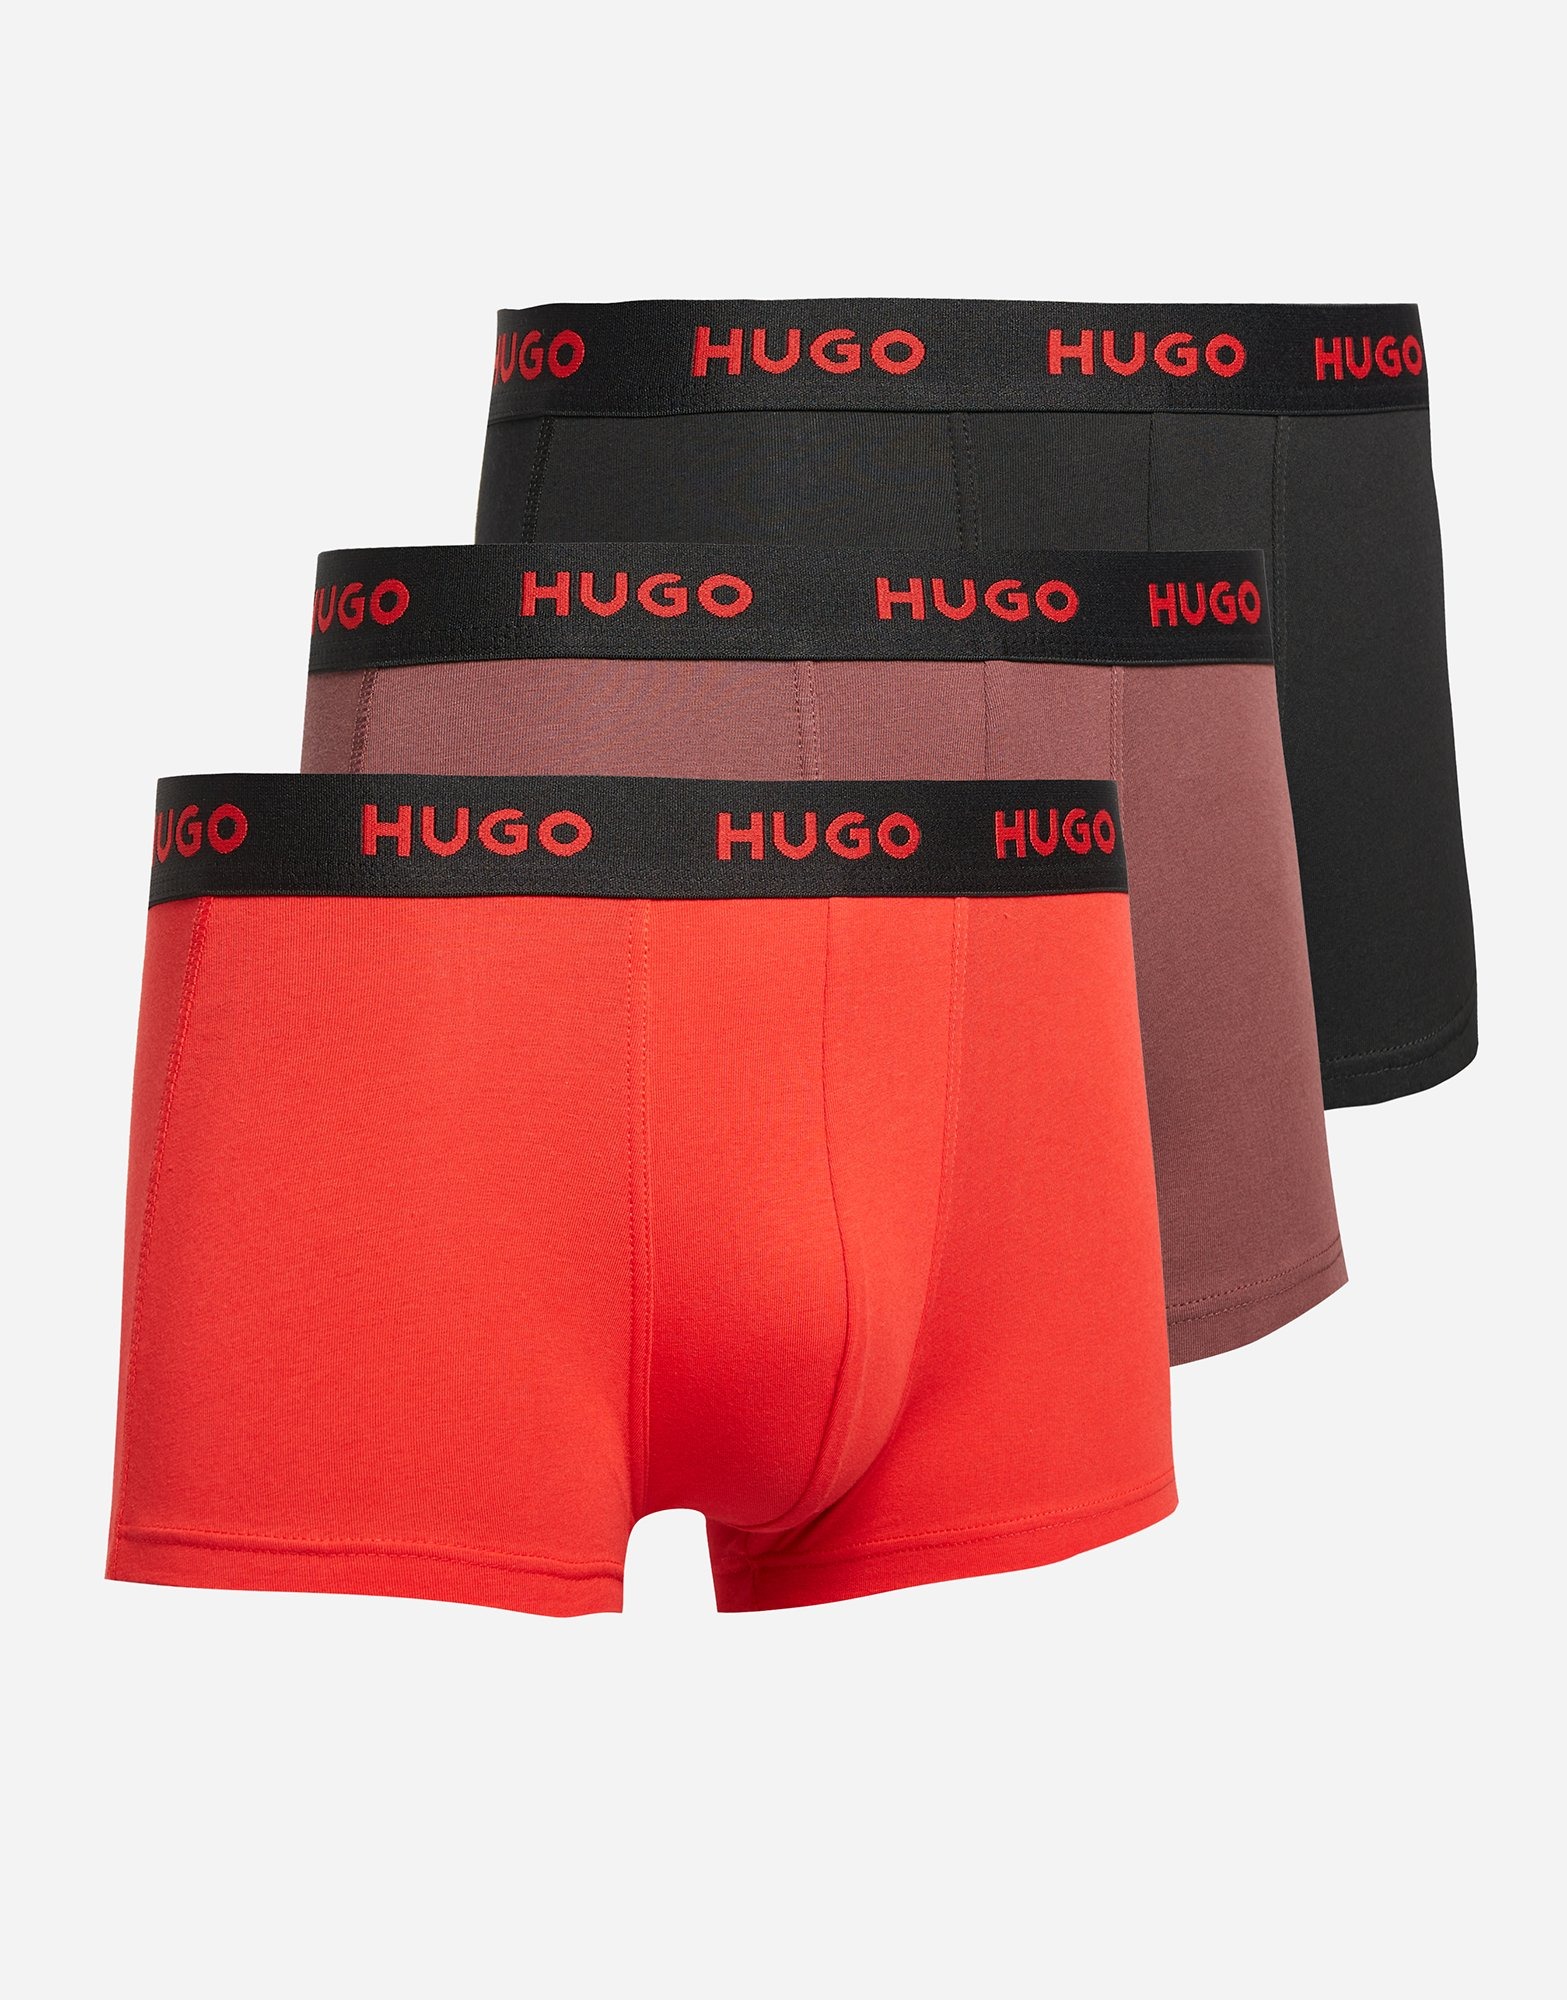 HUGO 3-Pack Underbukser Herre - Sports Danmark